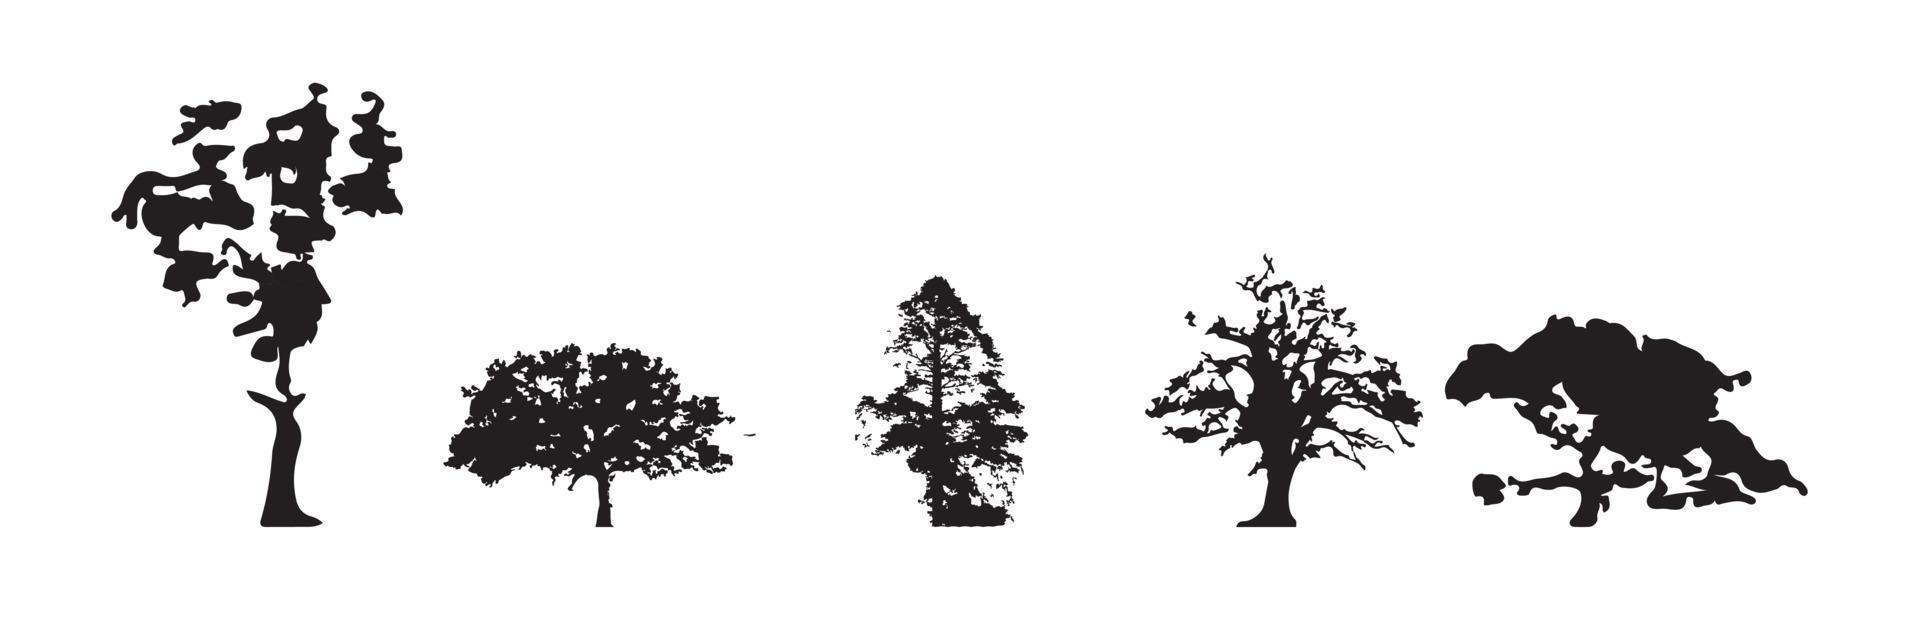 Conjunto de silueta de árboles aislado sobre fondo blanco. vector